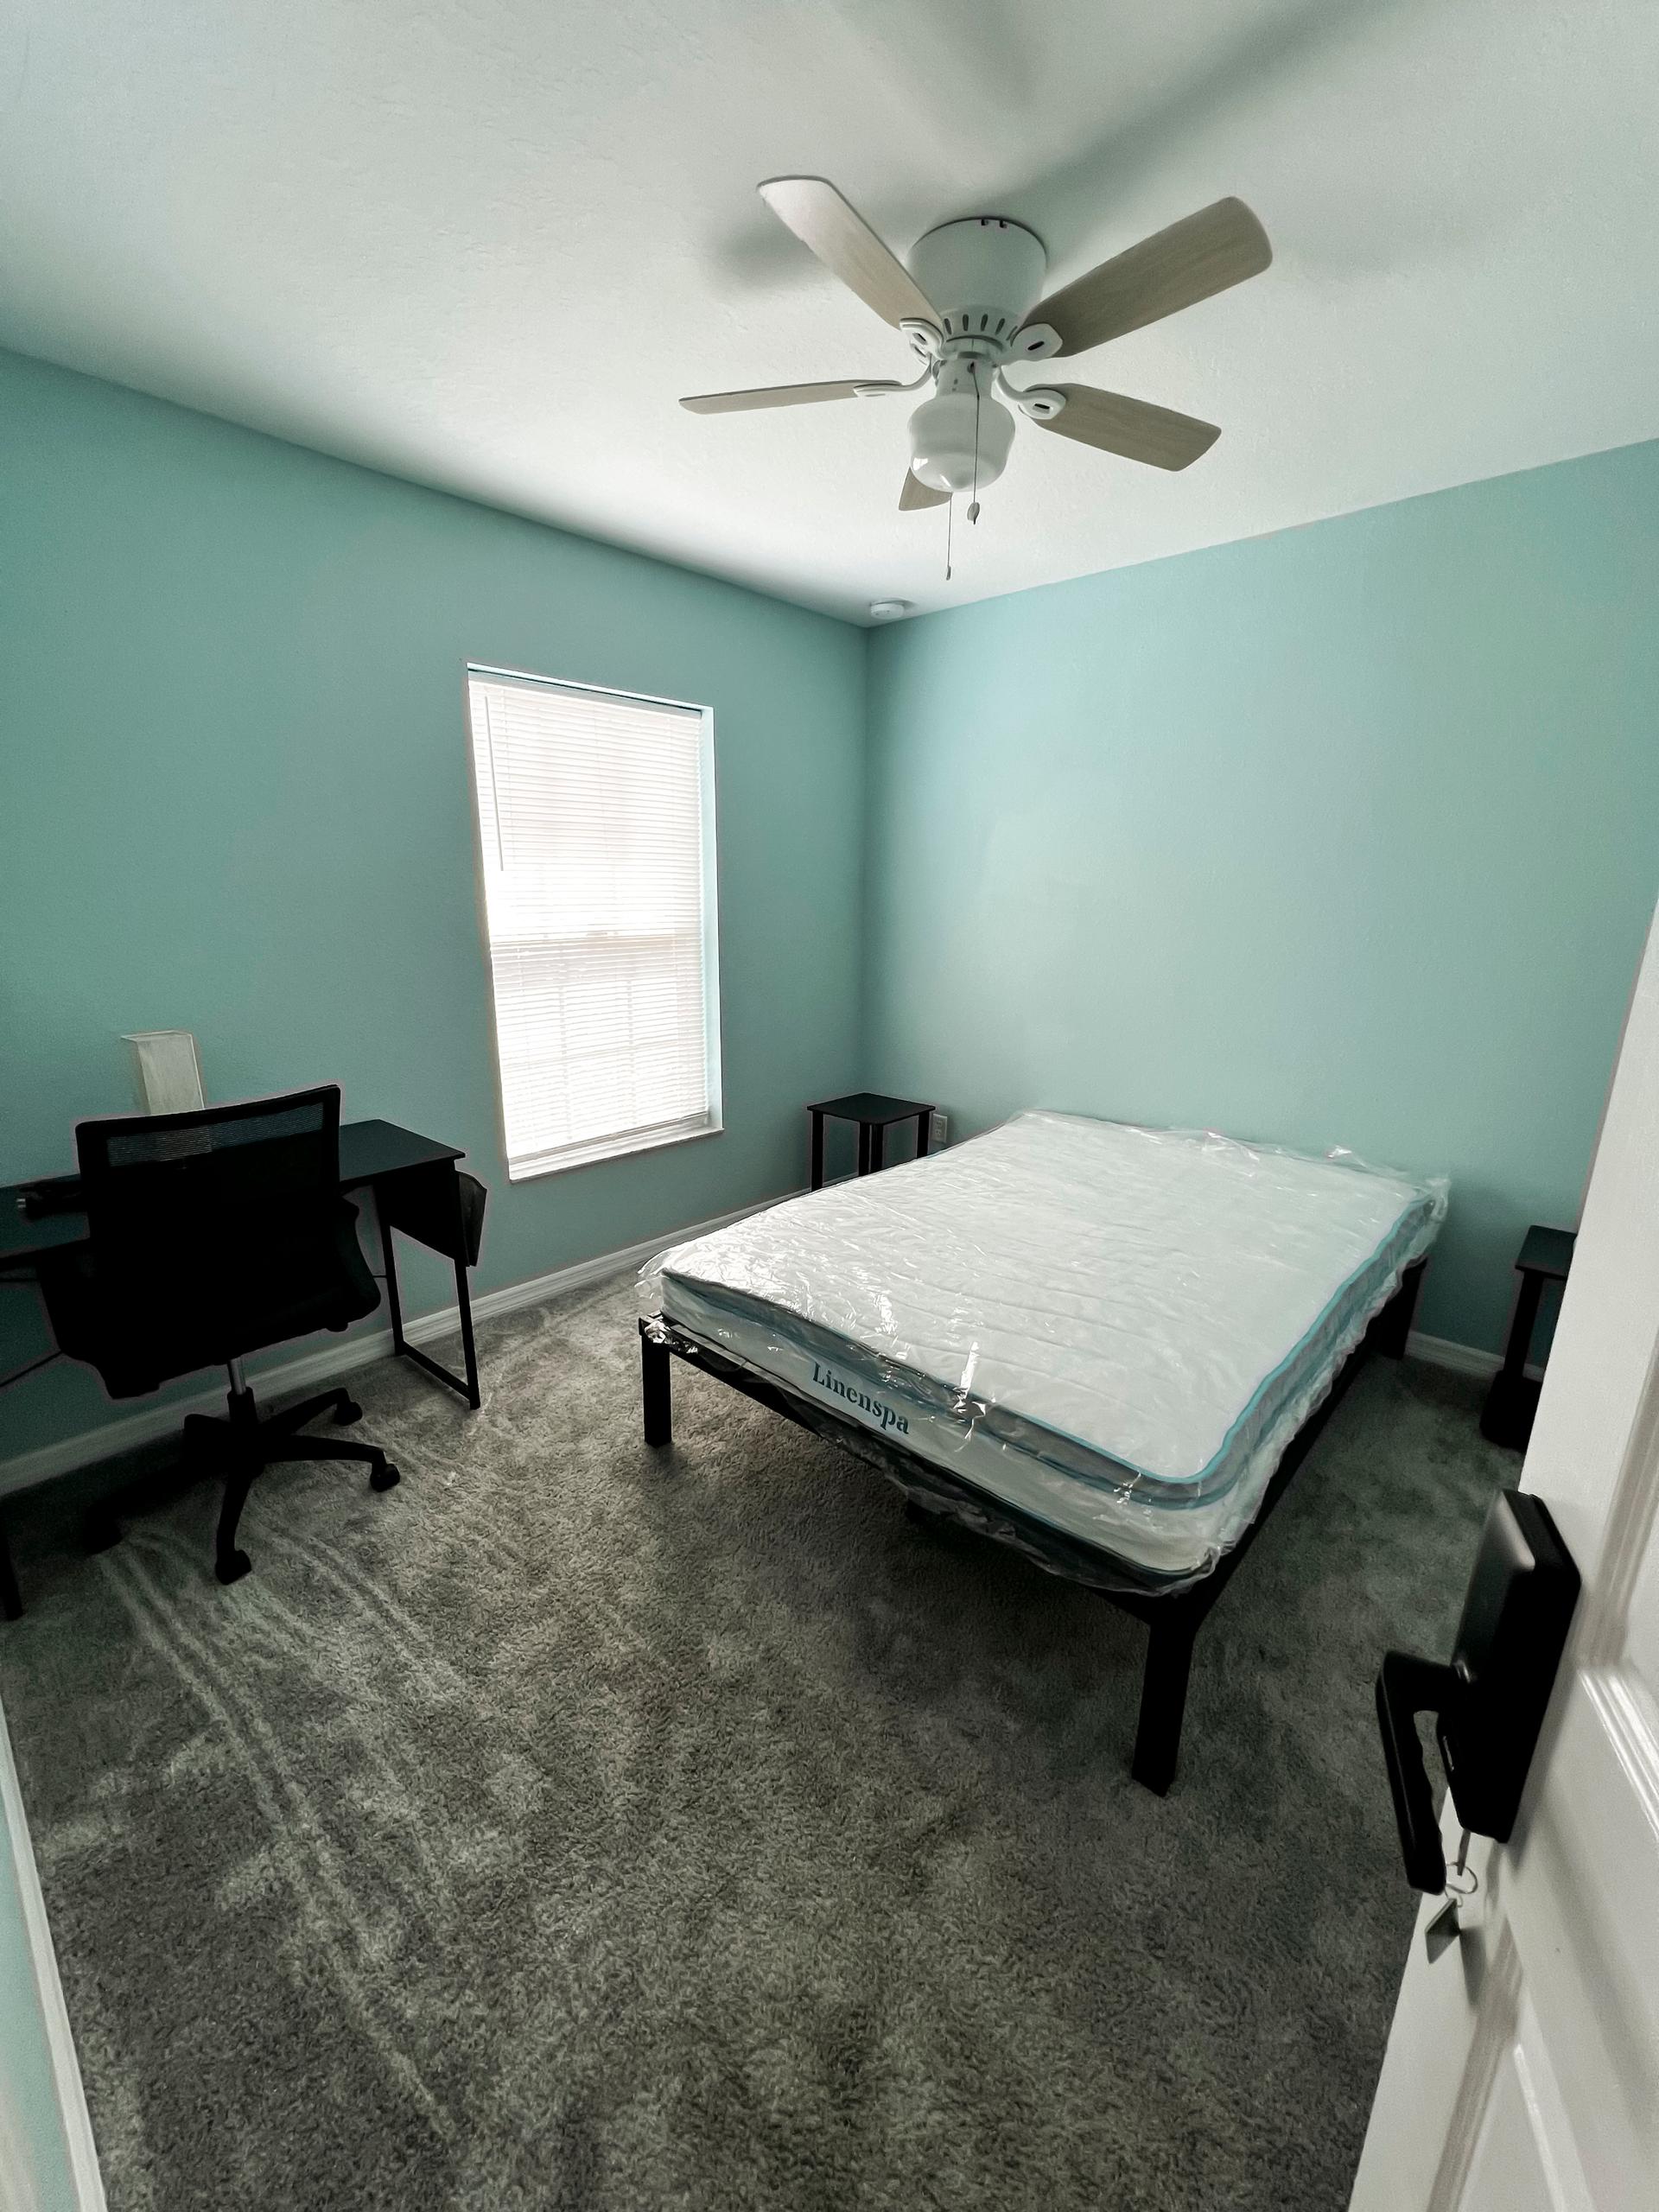 bedroom, detected:ceiling fan, bed, window blind